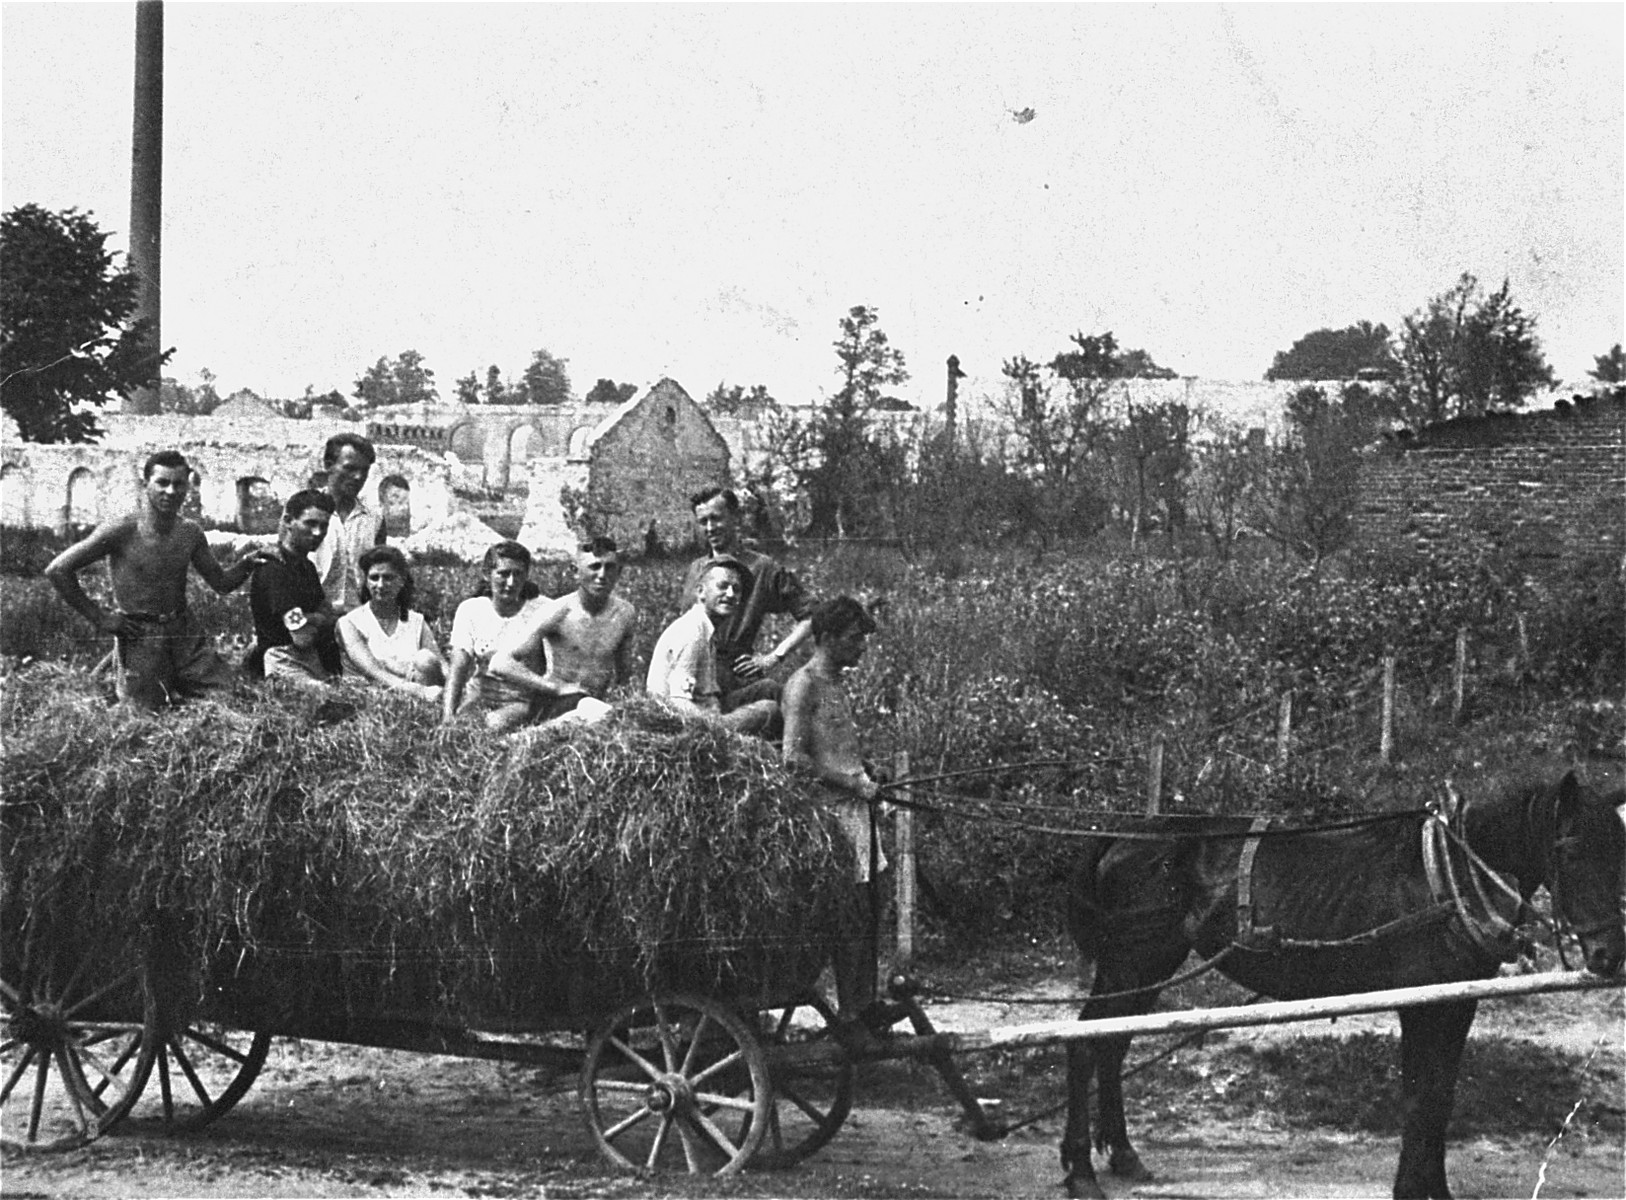 Members of the Hashomer Hatzair Zionist collective in Zarki ride on a hay wagon on their farm.  

Pictured from left to right are Motek Weinrib, Berel (Berek) Lemel, Srulek Warszawski, Lodzia Hamersztajn, Chagit Elster, Zborowski, unidentified, Arie Wilner and Avram Zilbersztajn.  The photo was taken during the visit of Arie Wilner.